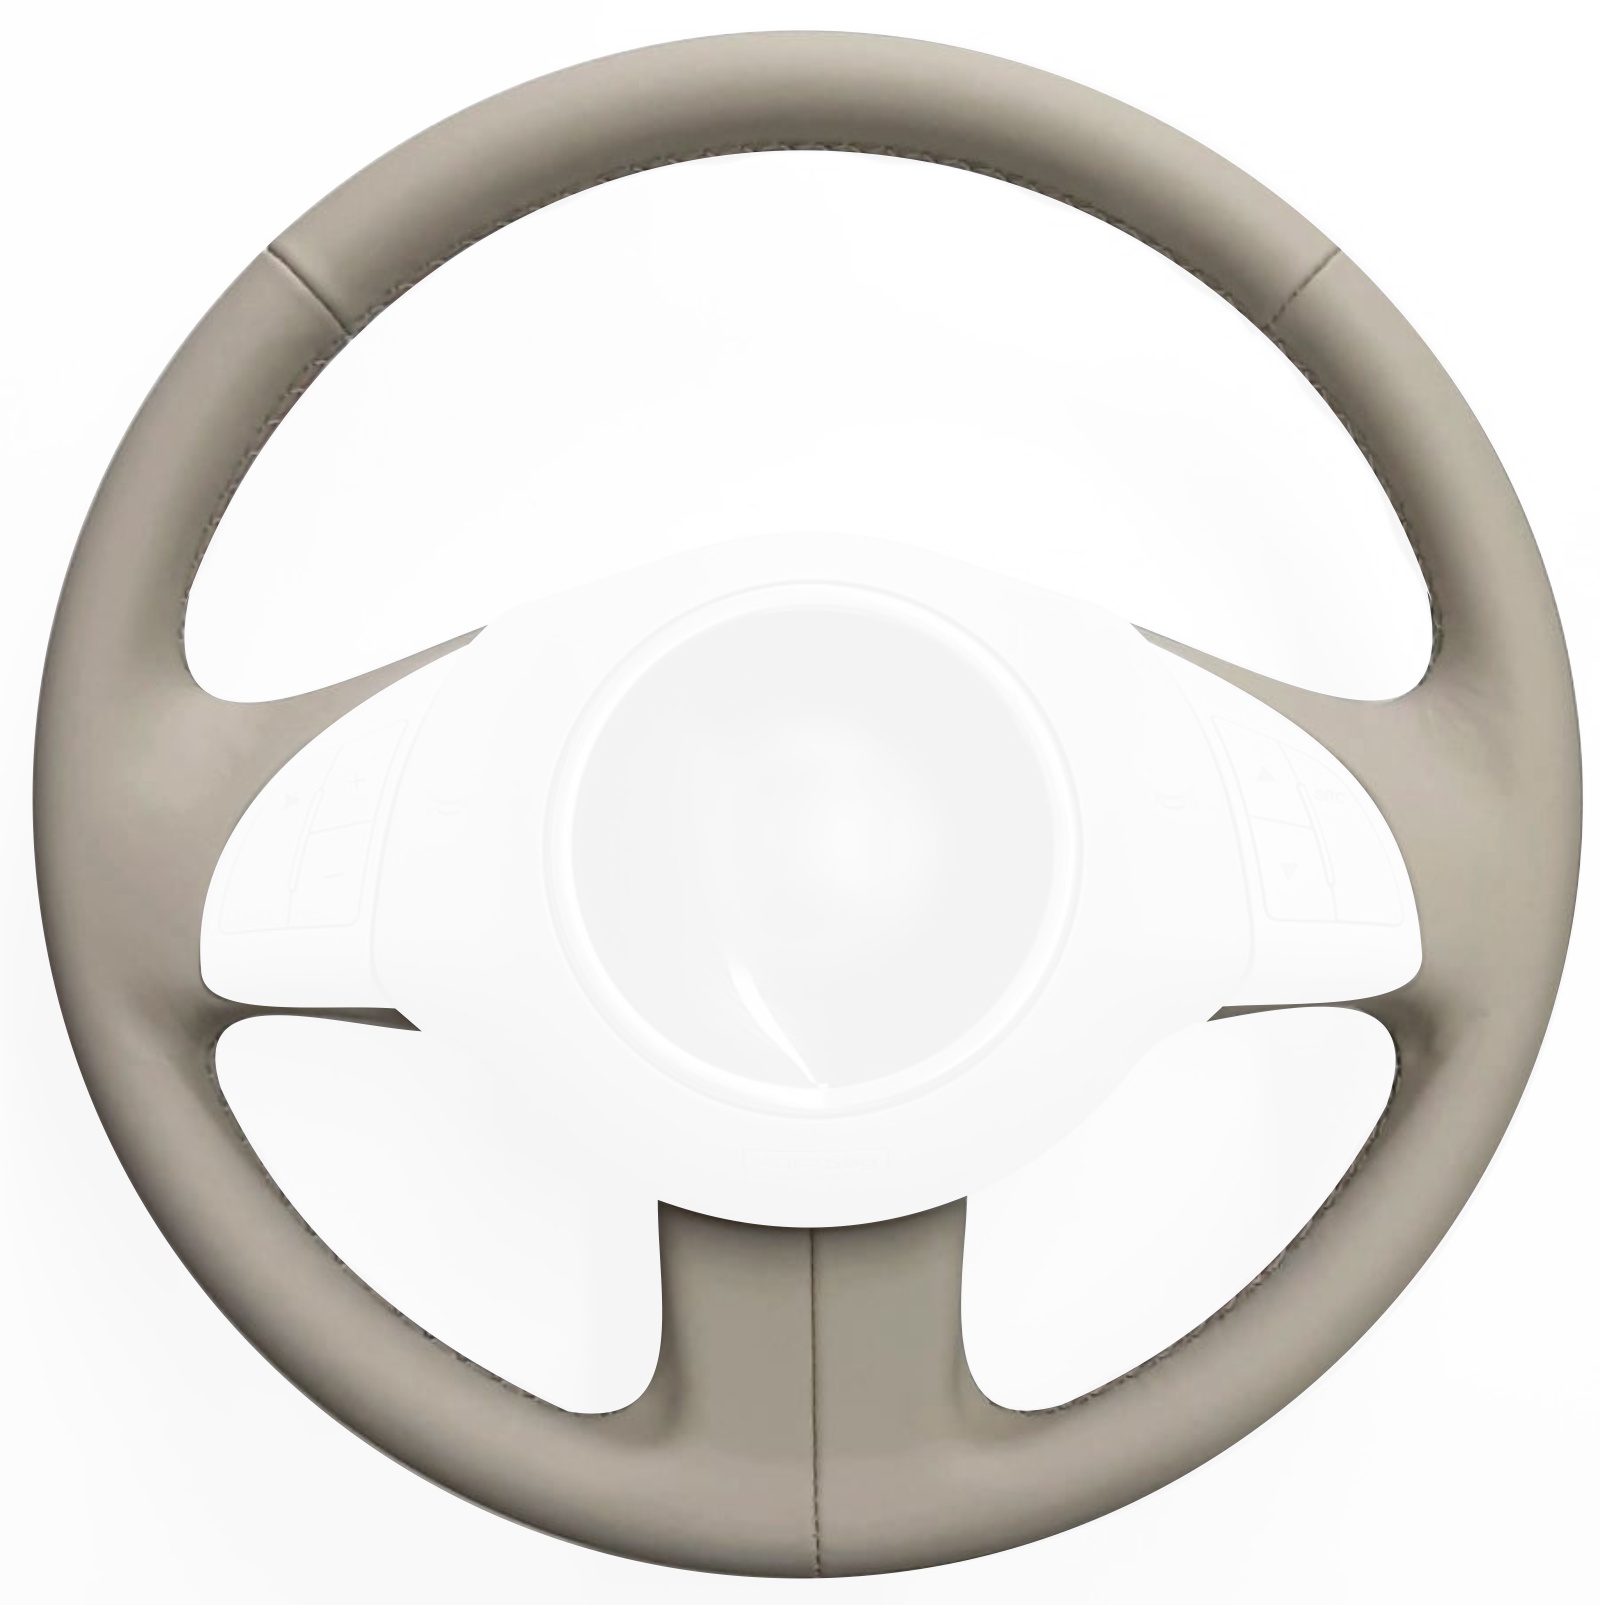 2008-21 Fiat 500 Abarth steering wheel cover - base wheel